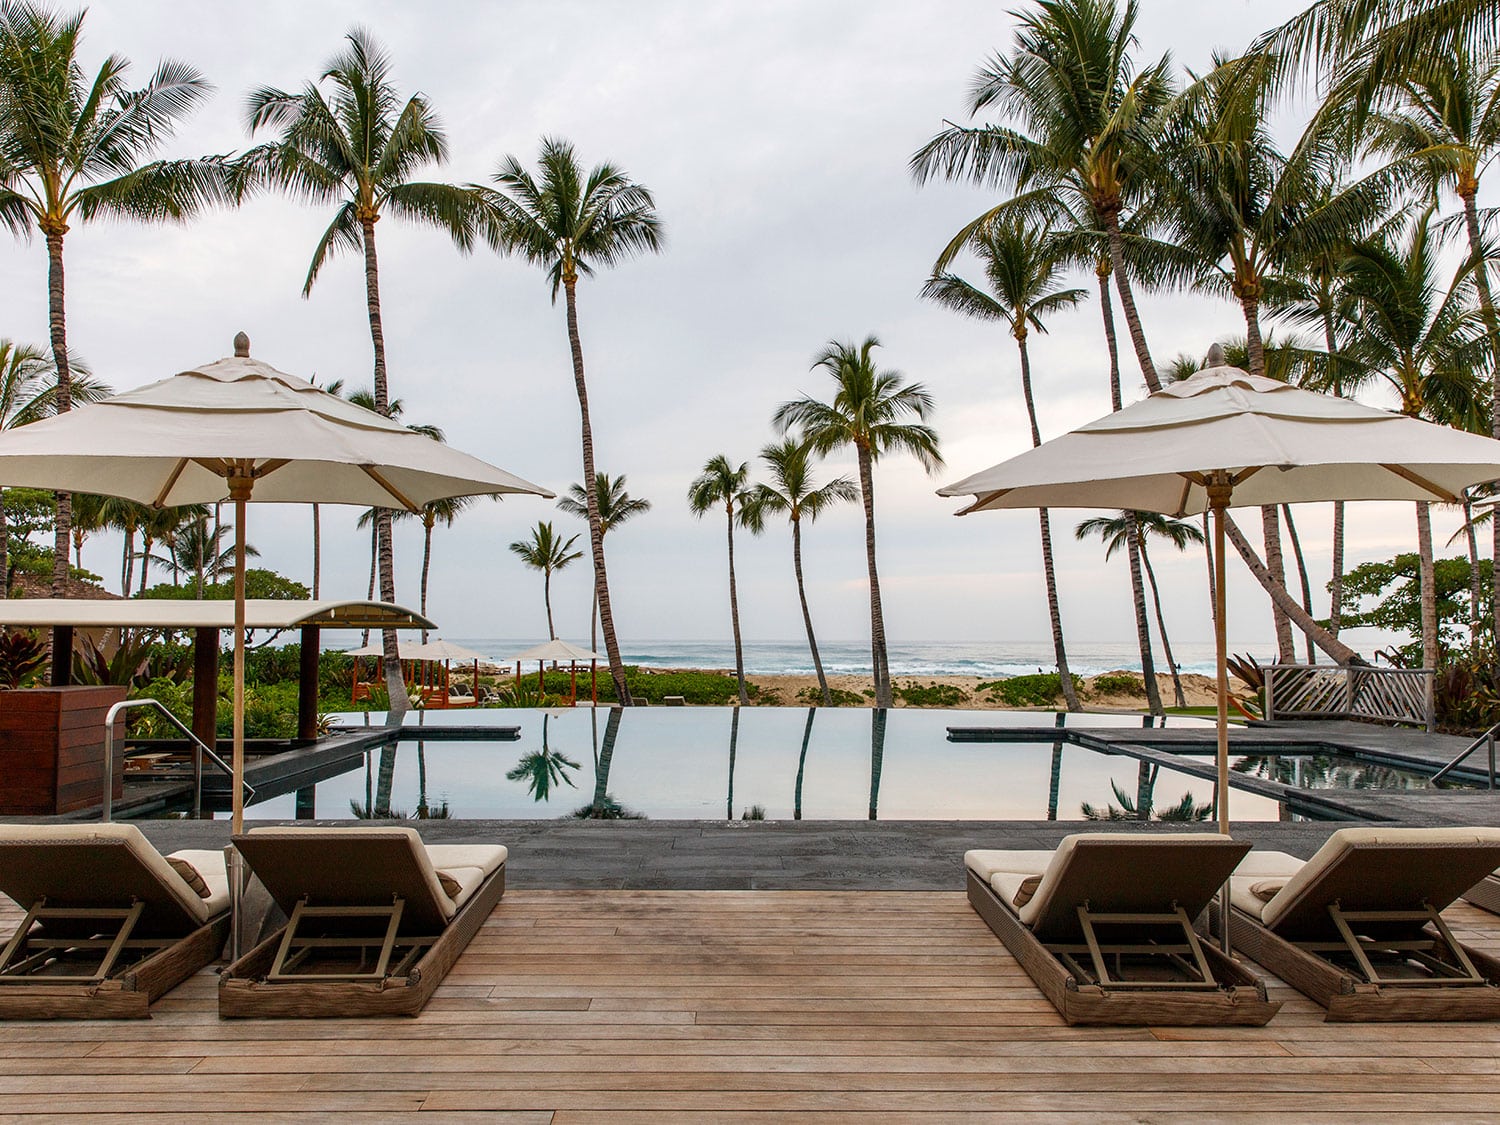 Lounge chairs beside an oceanside resort pool.